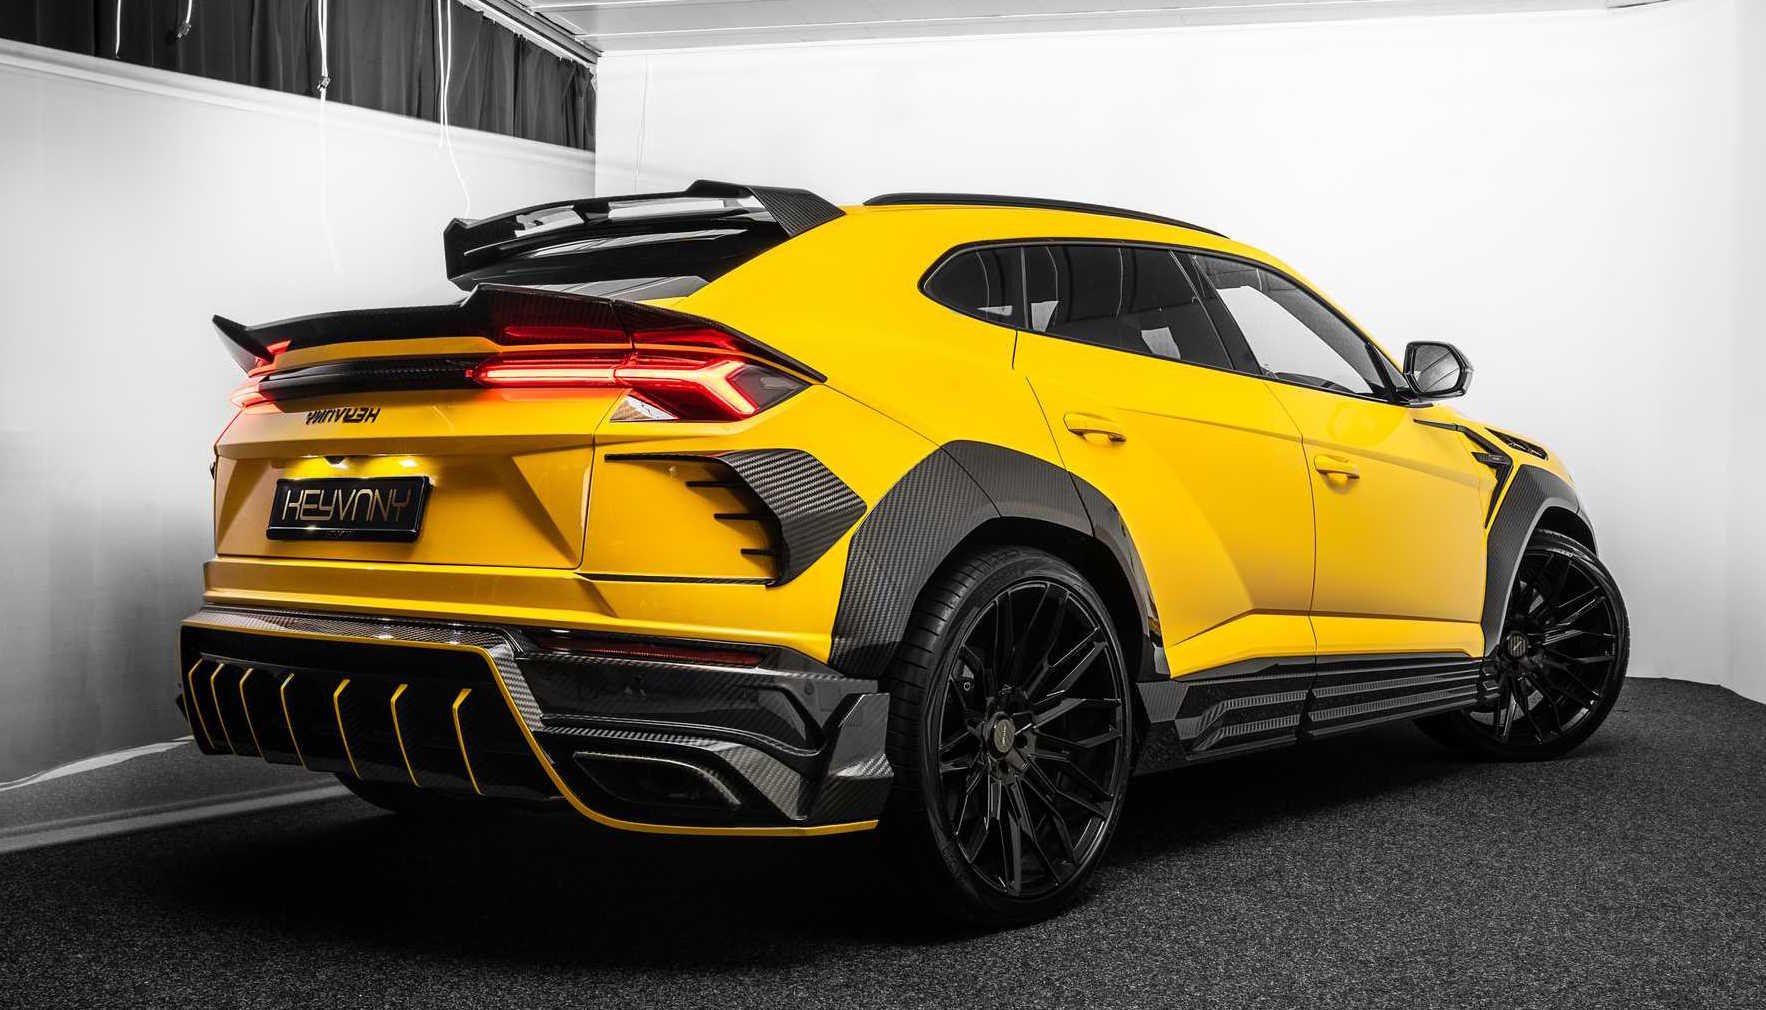 Keyvany creates crazy Lamborghini Urus upgrades - PerformanceDrive